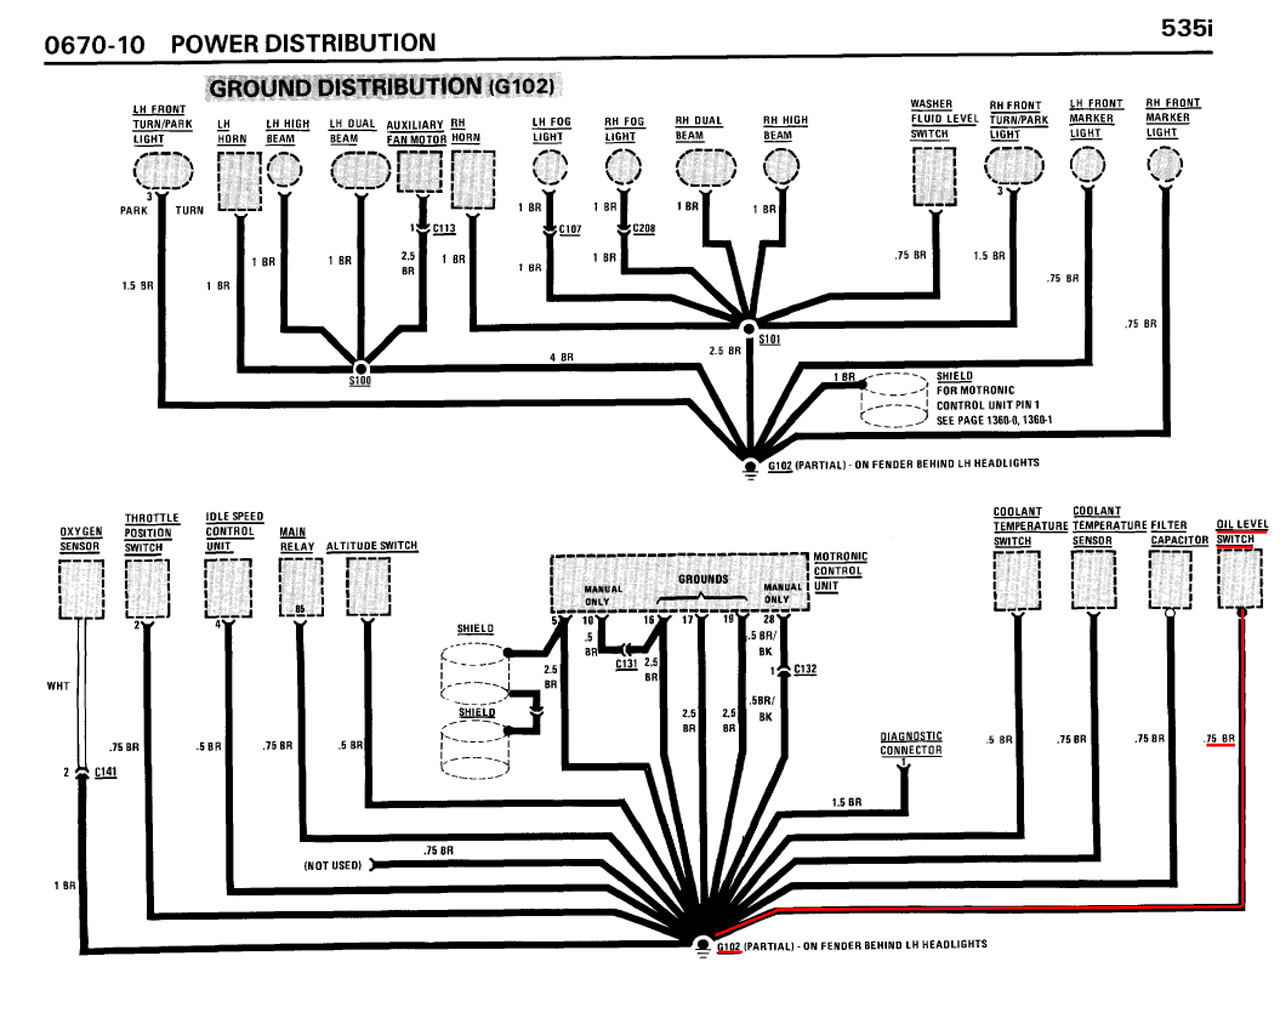 M30 b34/b35 oil level sensor wire diagram help? • MyE28.com